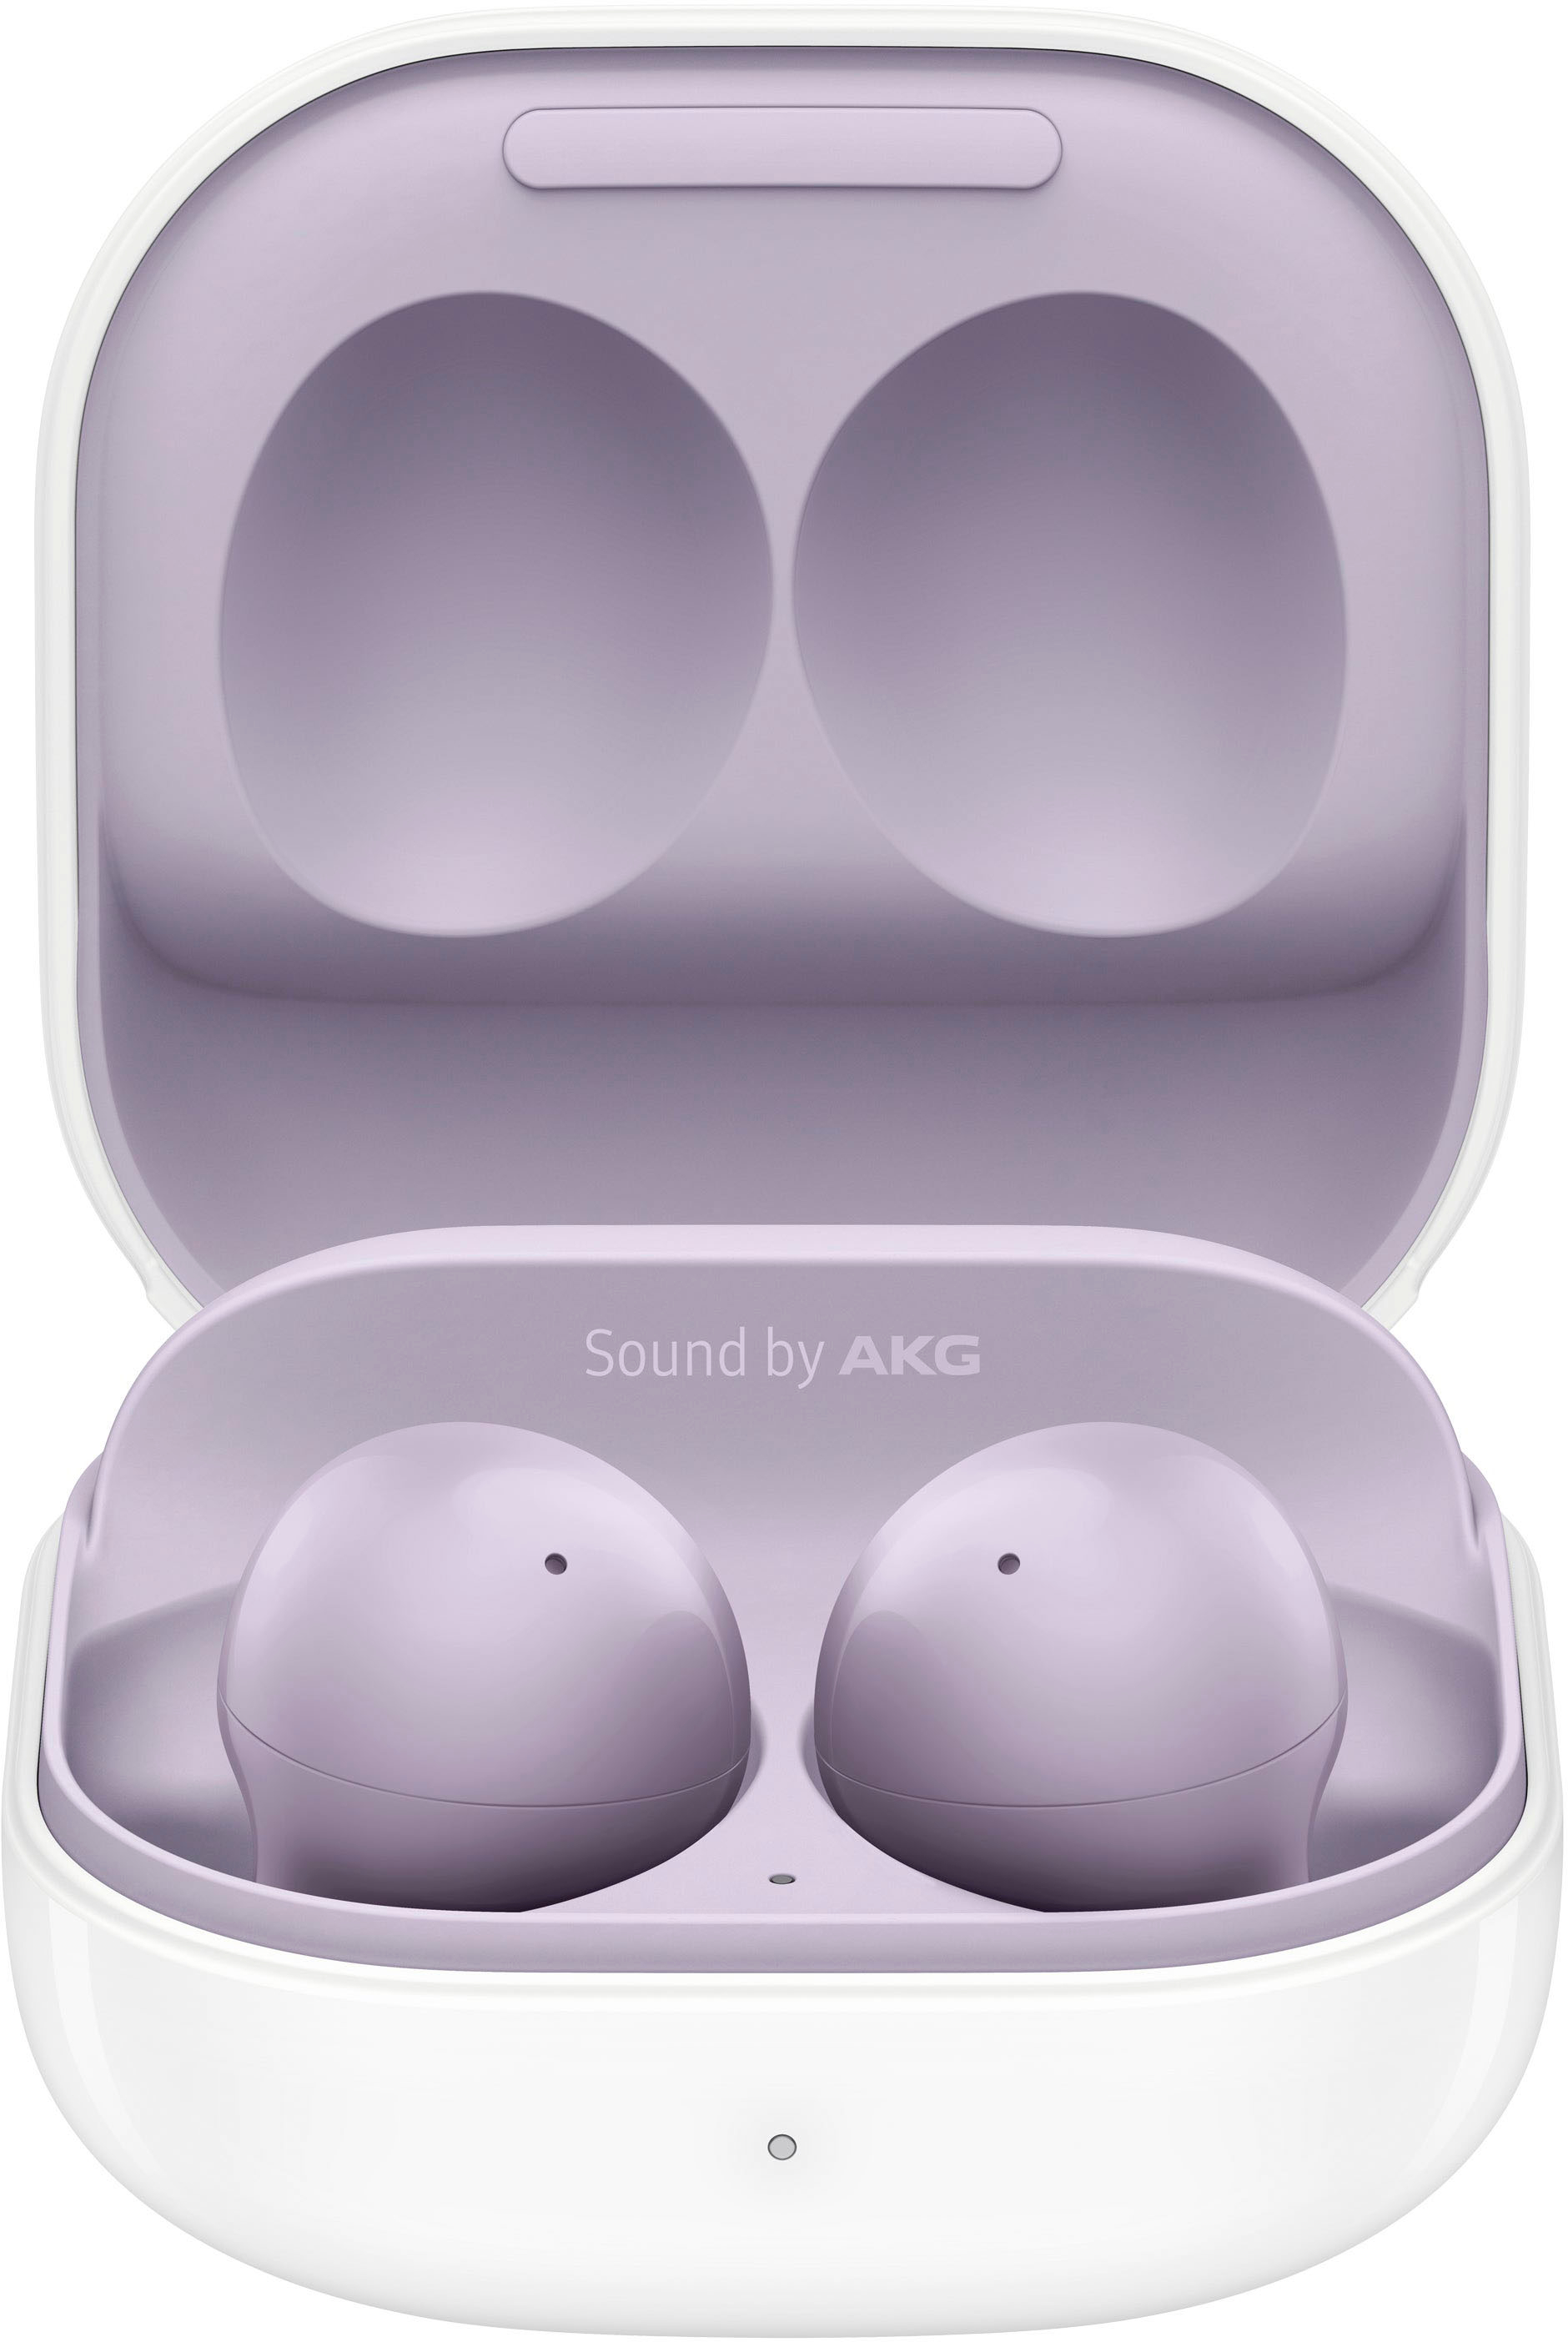 Samsung - Galaxy Buds2 True Wireless Earbud Headphones - Lavender